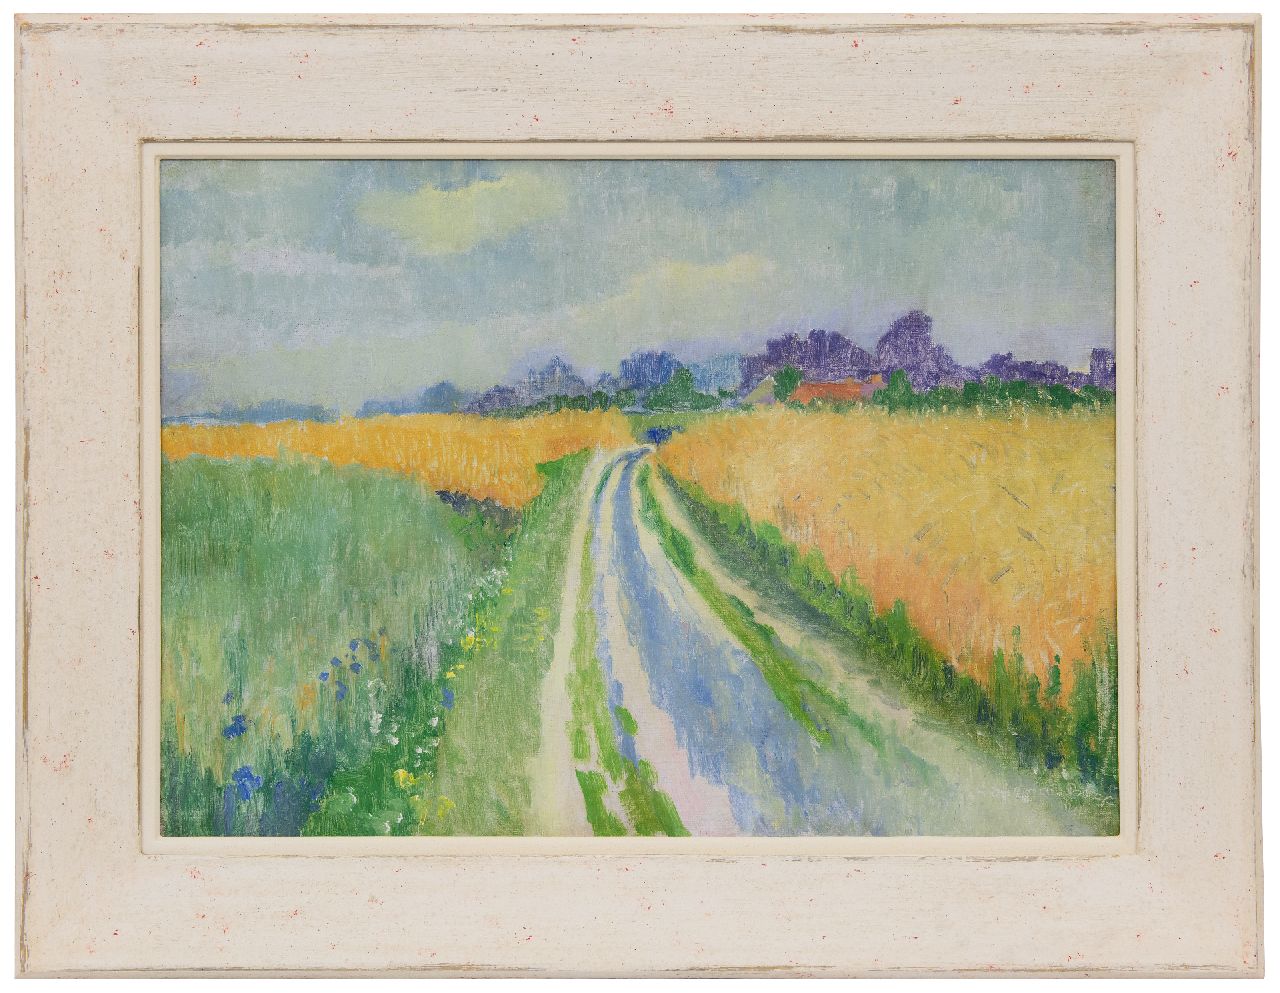 Berg S.R. van den | Sybren Ridsert 'Siep' van den Berg | Paintings offered for sale | Country road between wheat fields, Zuidlaren, oil on canvas 50.2 x 70.3 cm, signed l.r. and dated '44